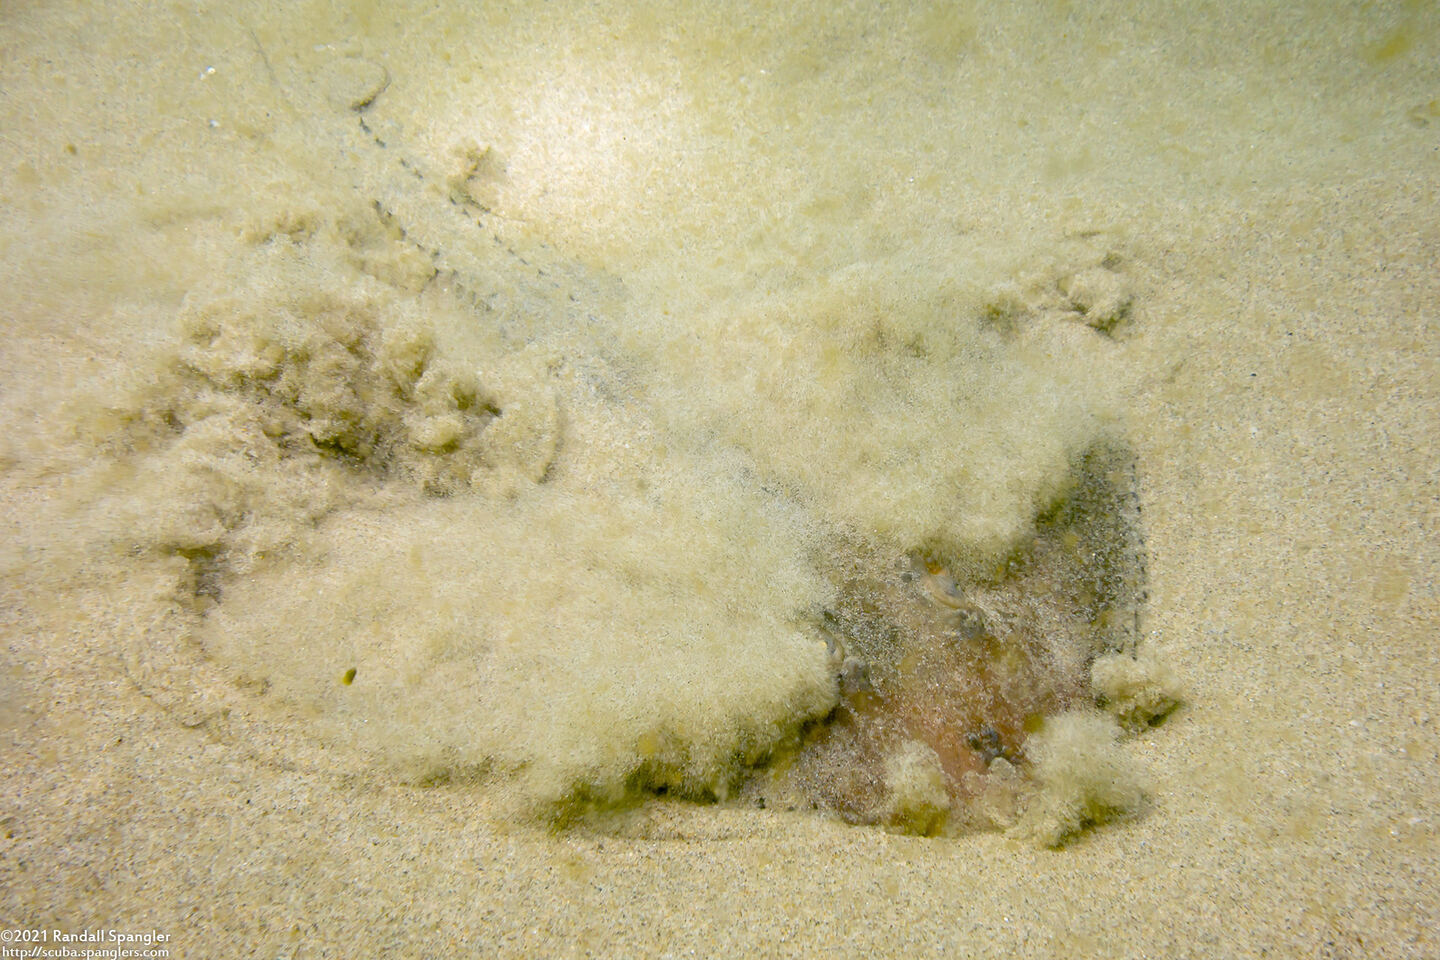 Platyrhinoidis triseriata (Thornback); Burying itself in sand